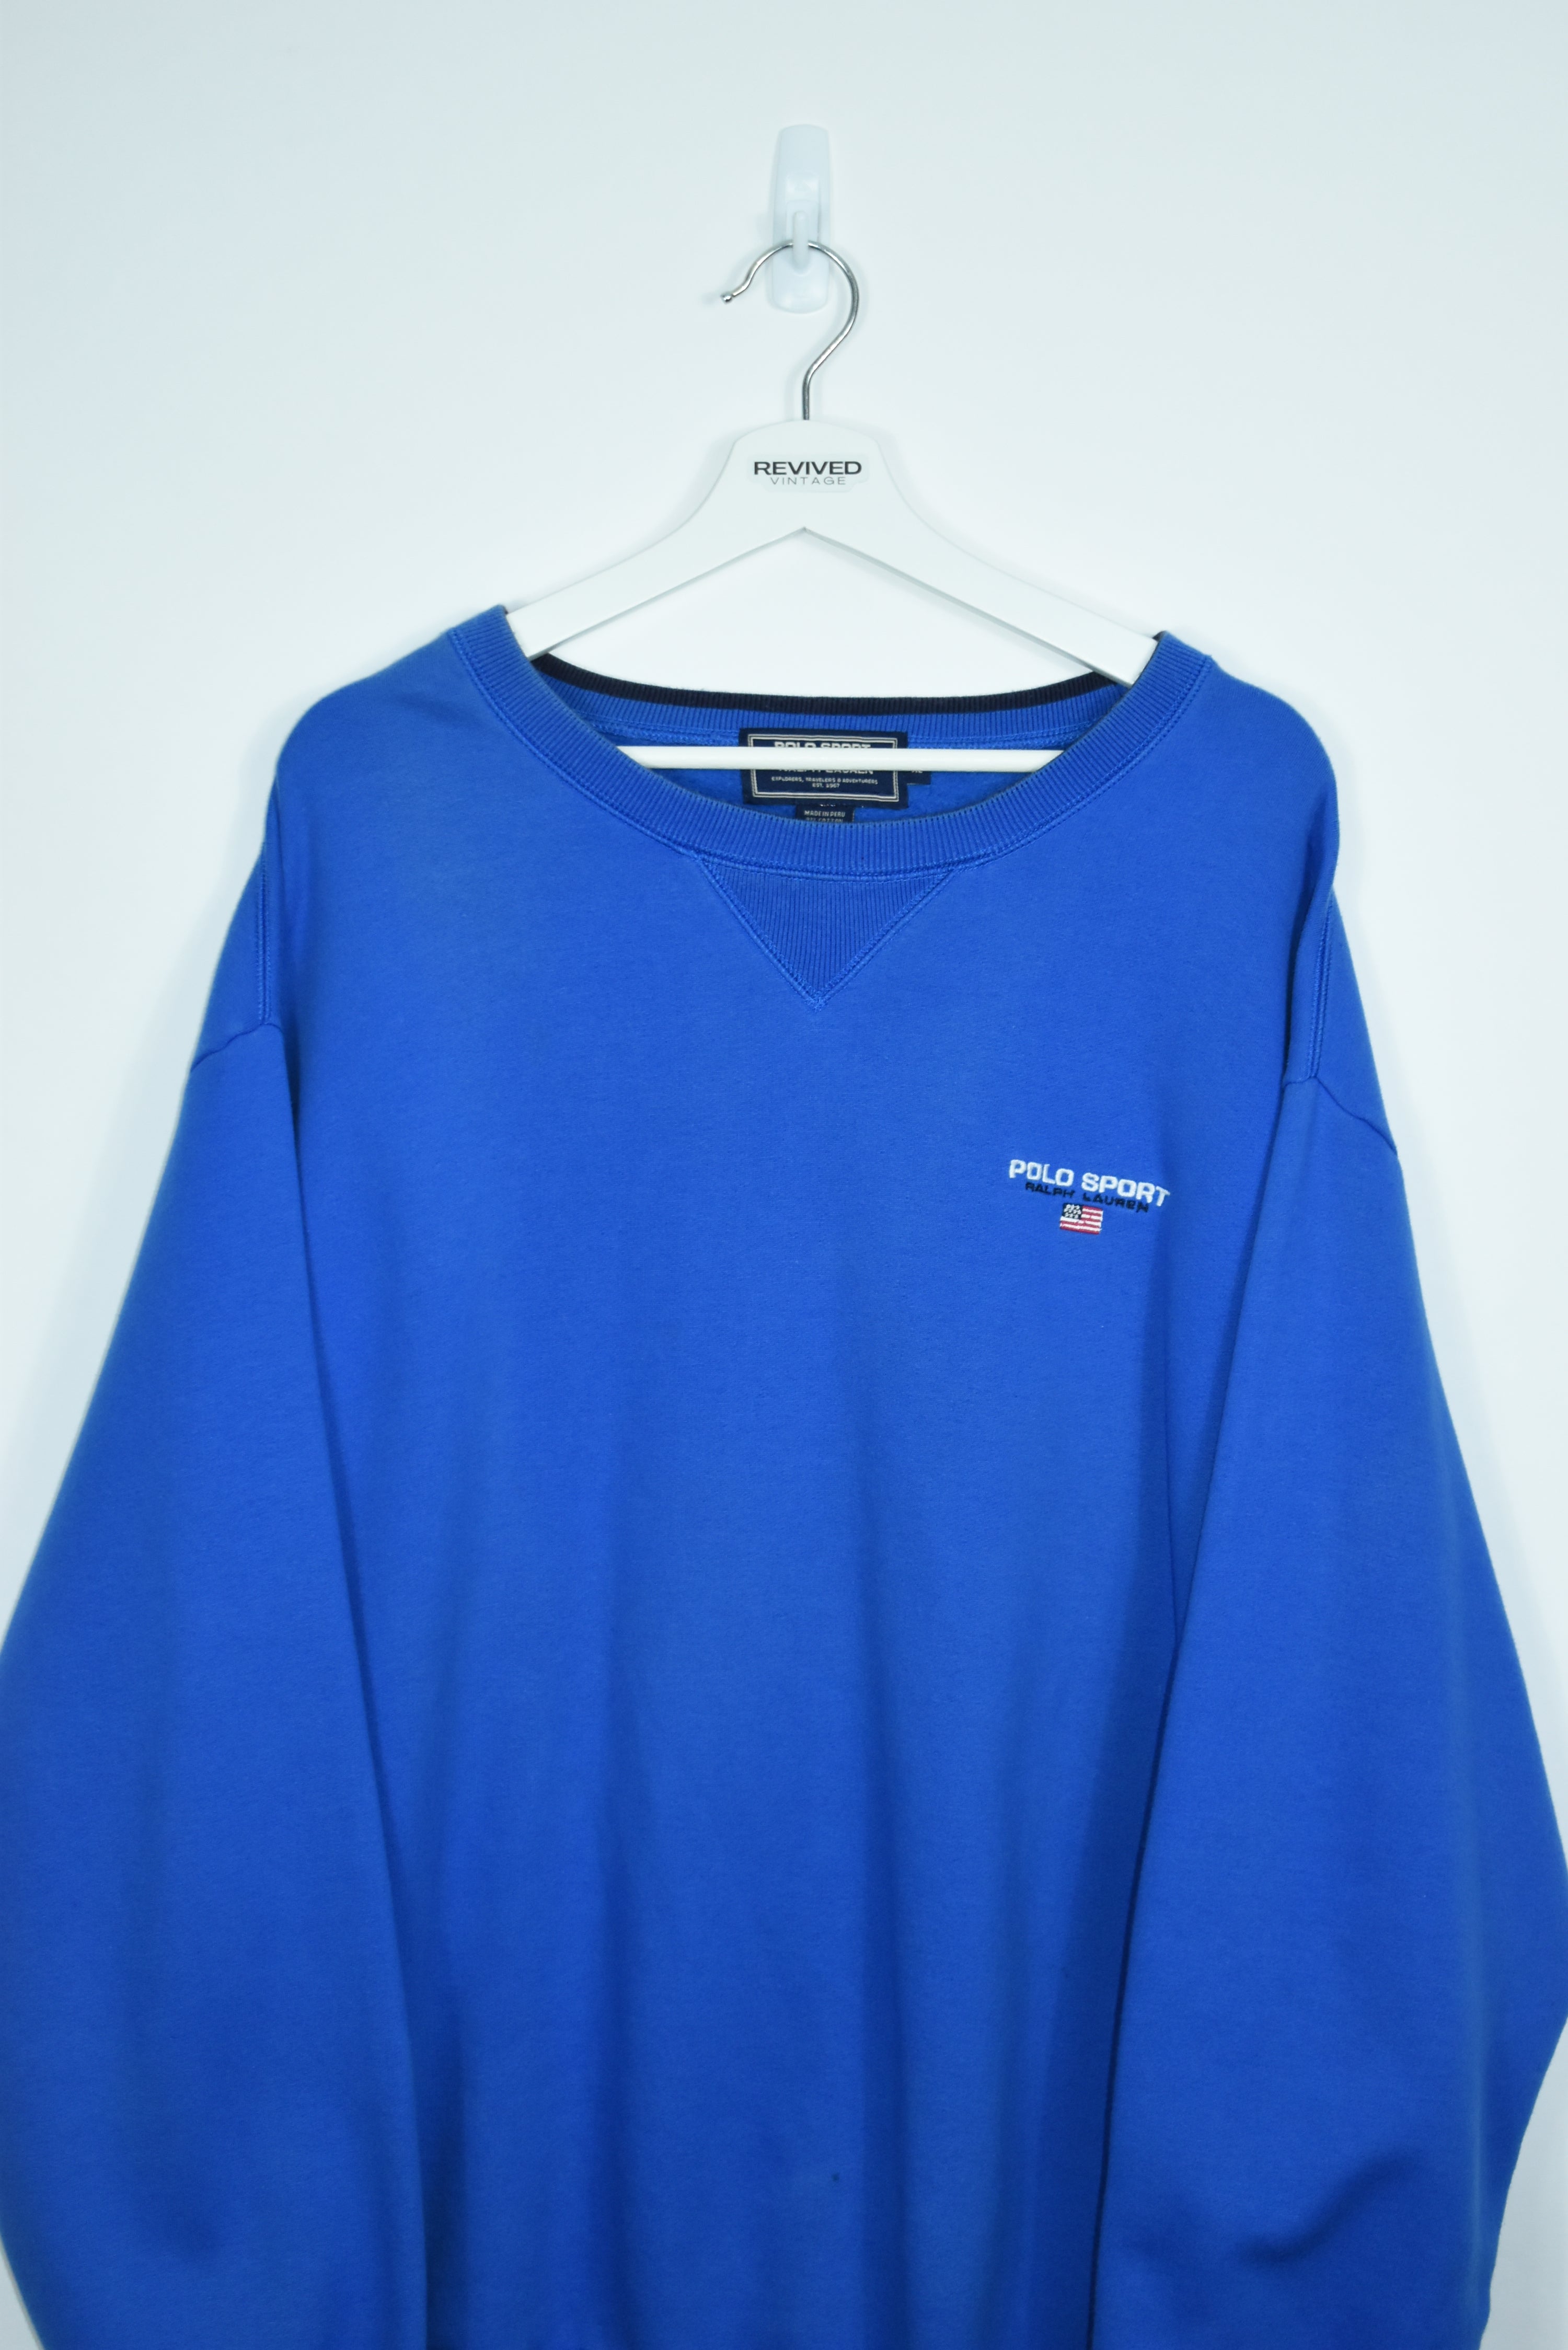 Vintage Ralph Lauren Polo Sport Embroidery Sweatshirt XLARGE